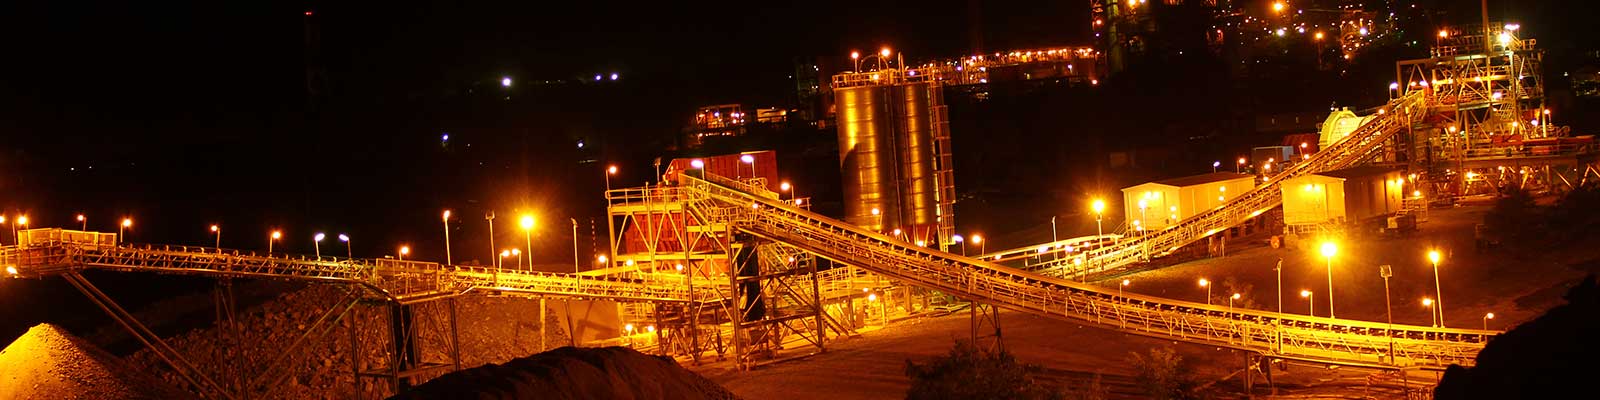 Syama Gold Mine, Mali West Africa